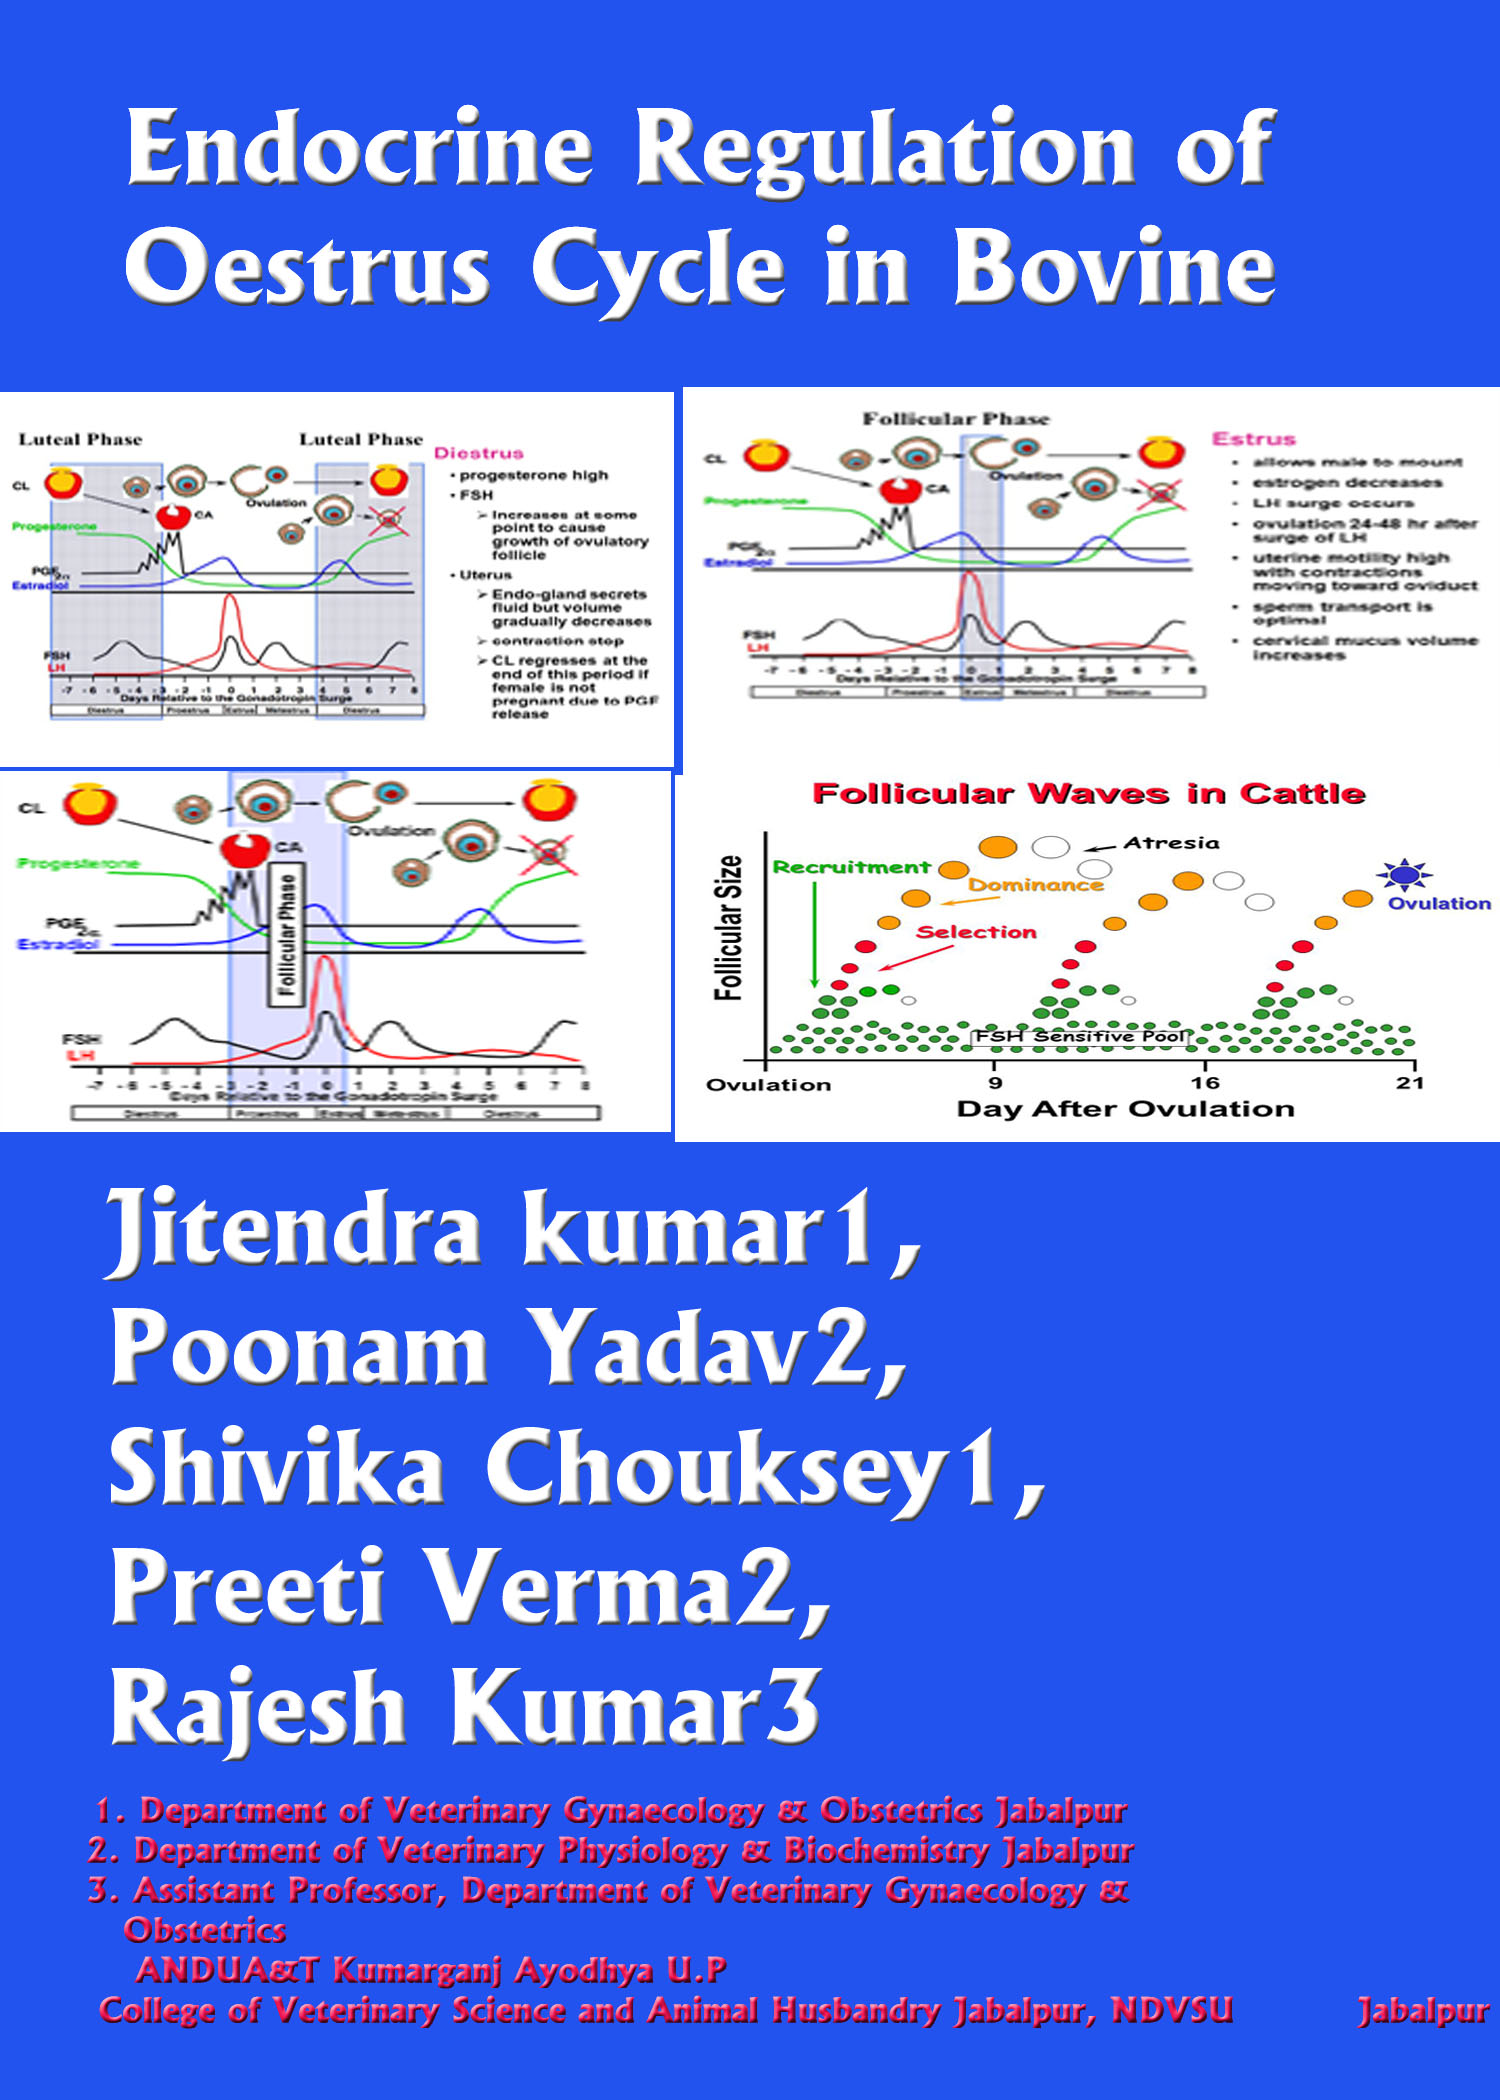 Endocrine Regulation of Oestrus Cycle in Bovine – Pashudhan praharee